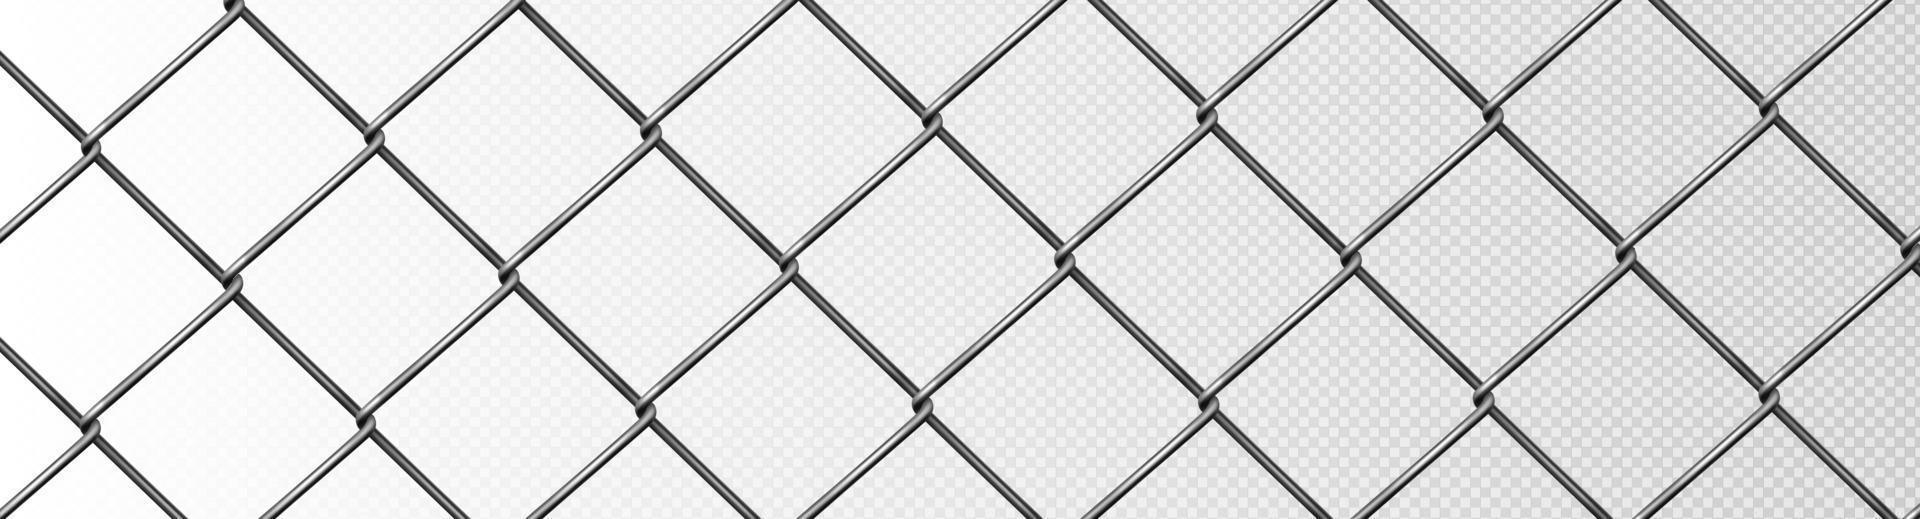 Metal fence mesh, pattern steel wire grid vector